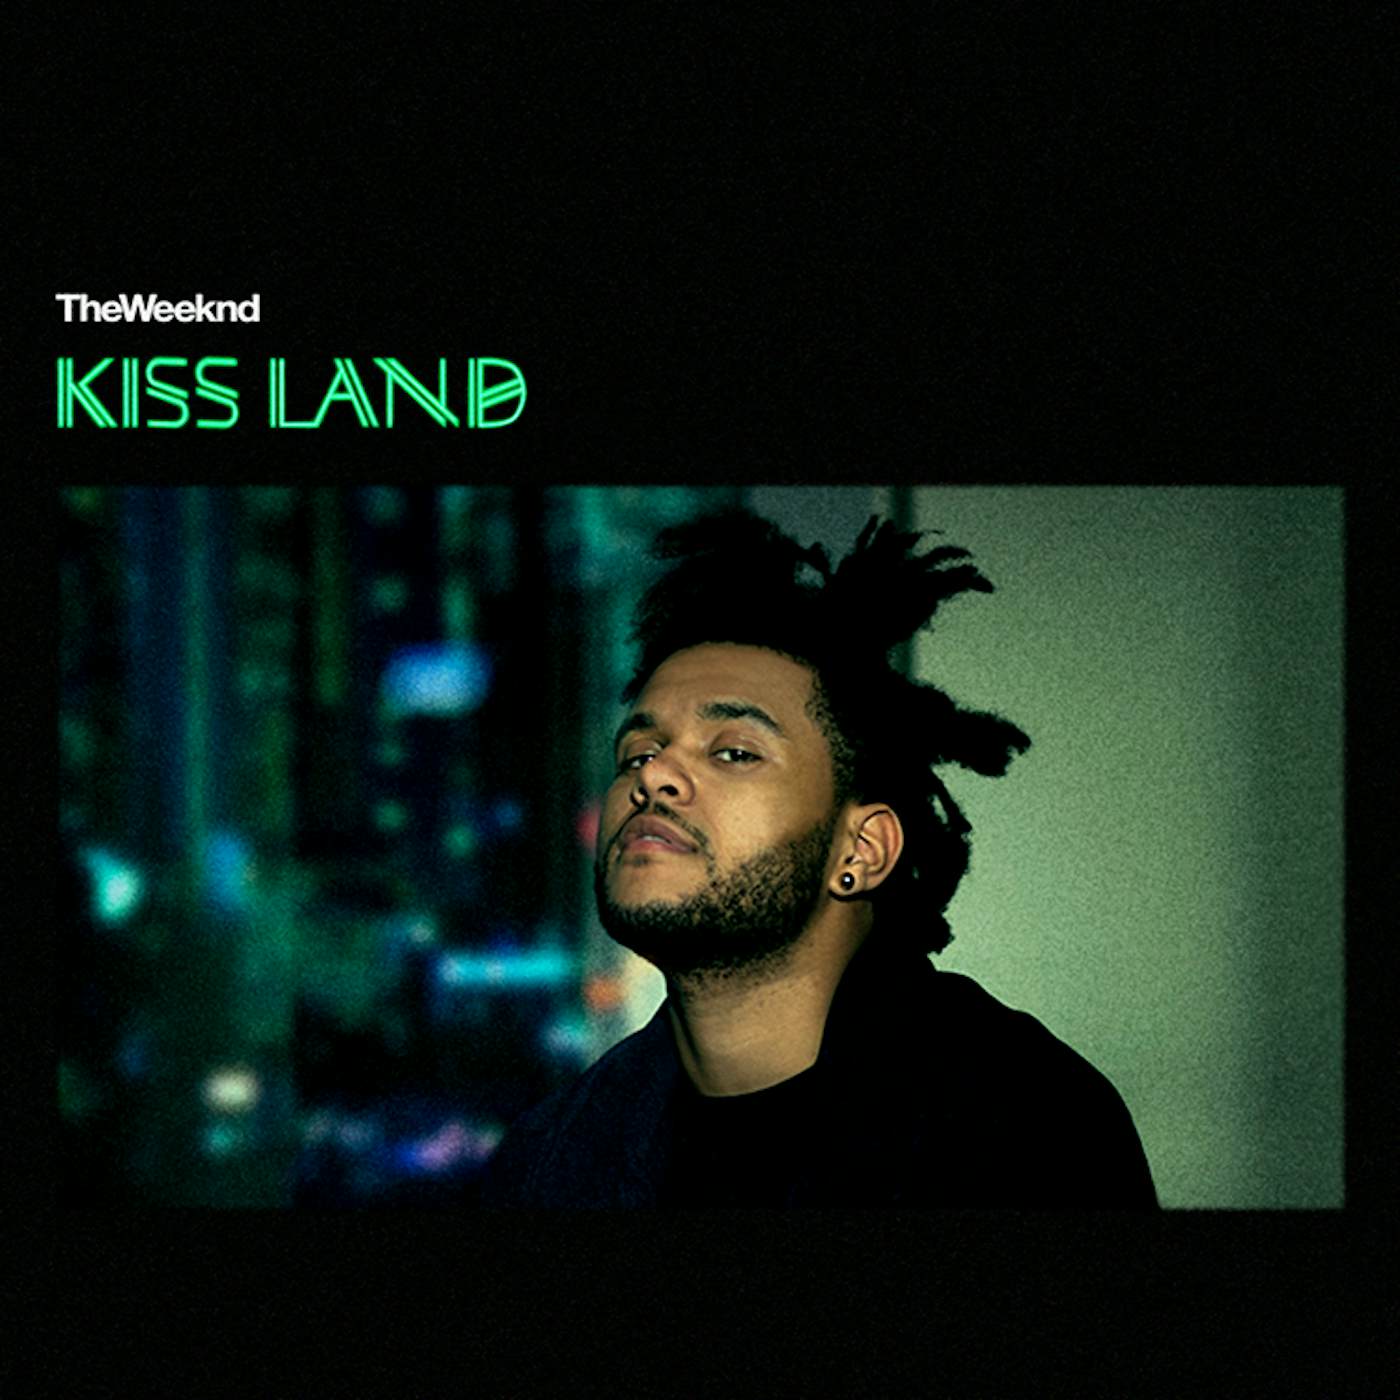 The Weeknd KISS LAND CD